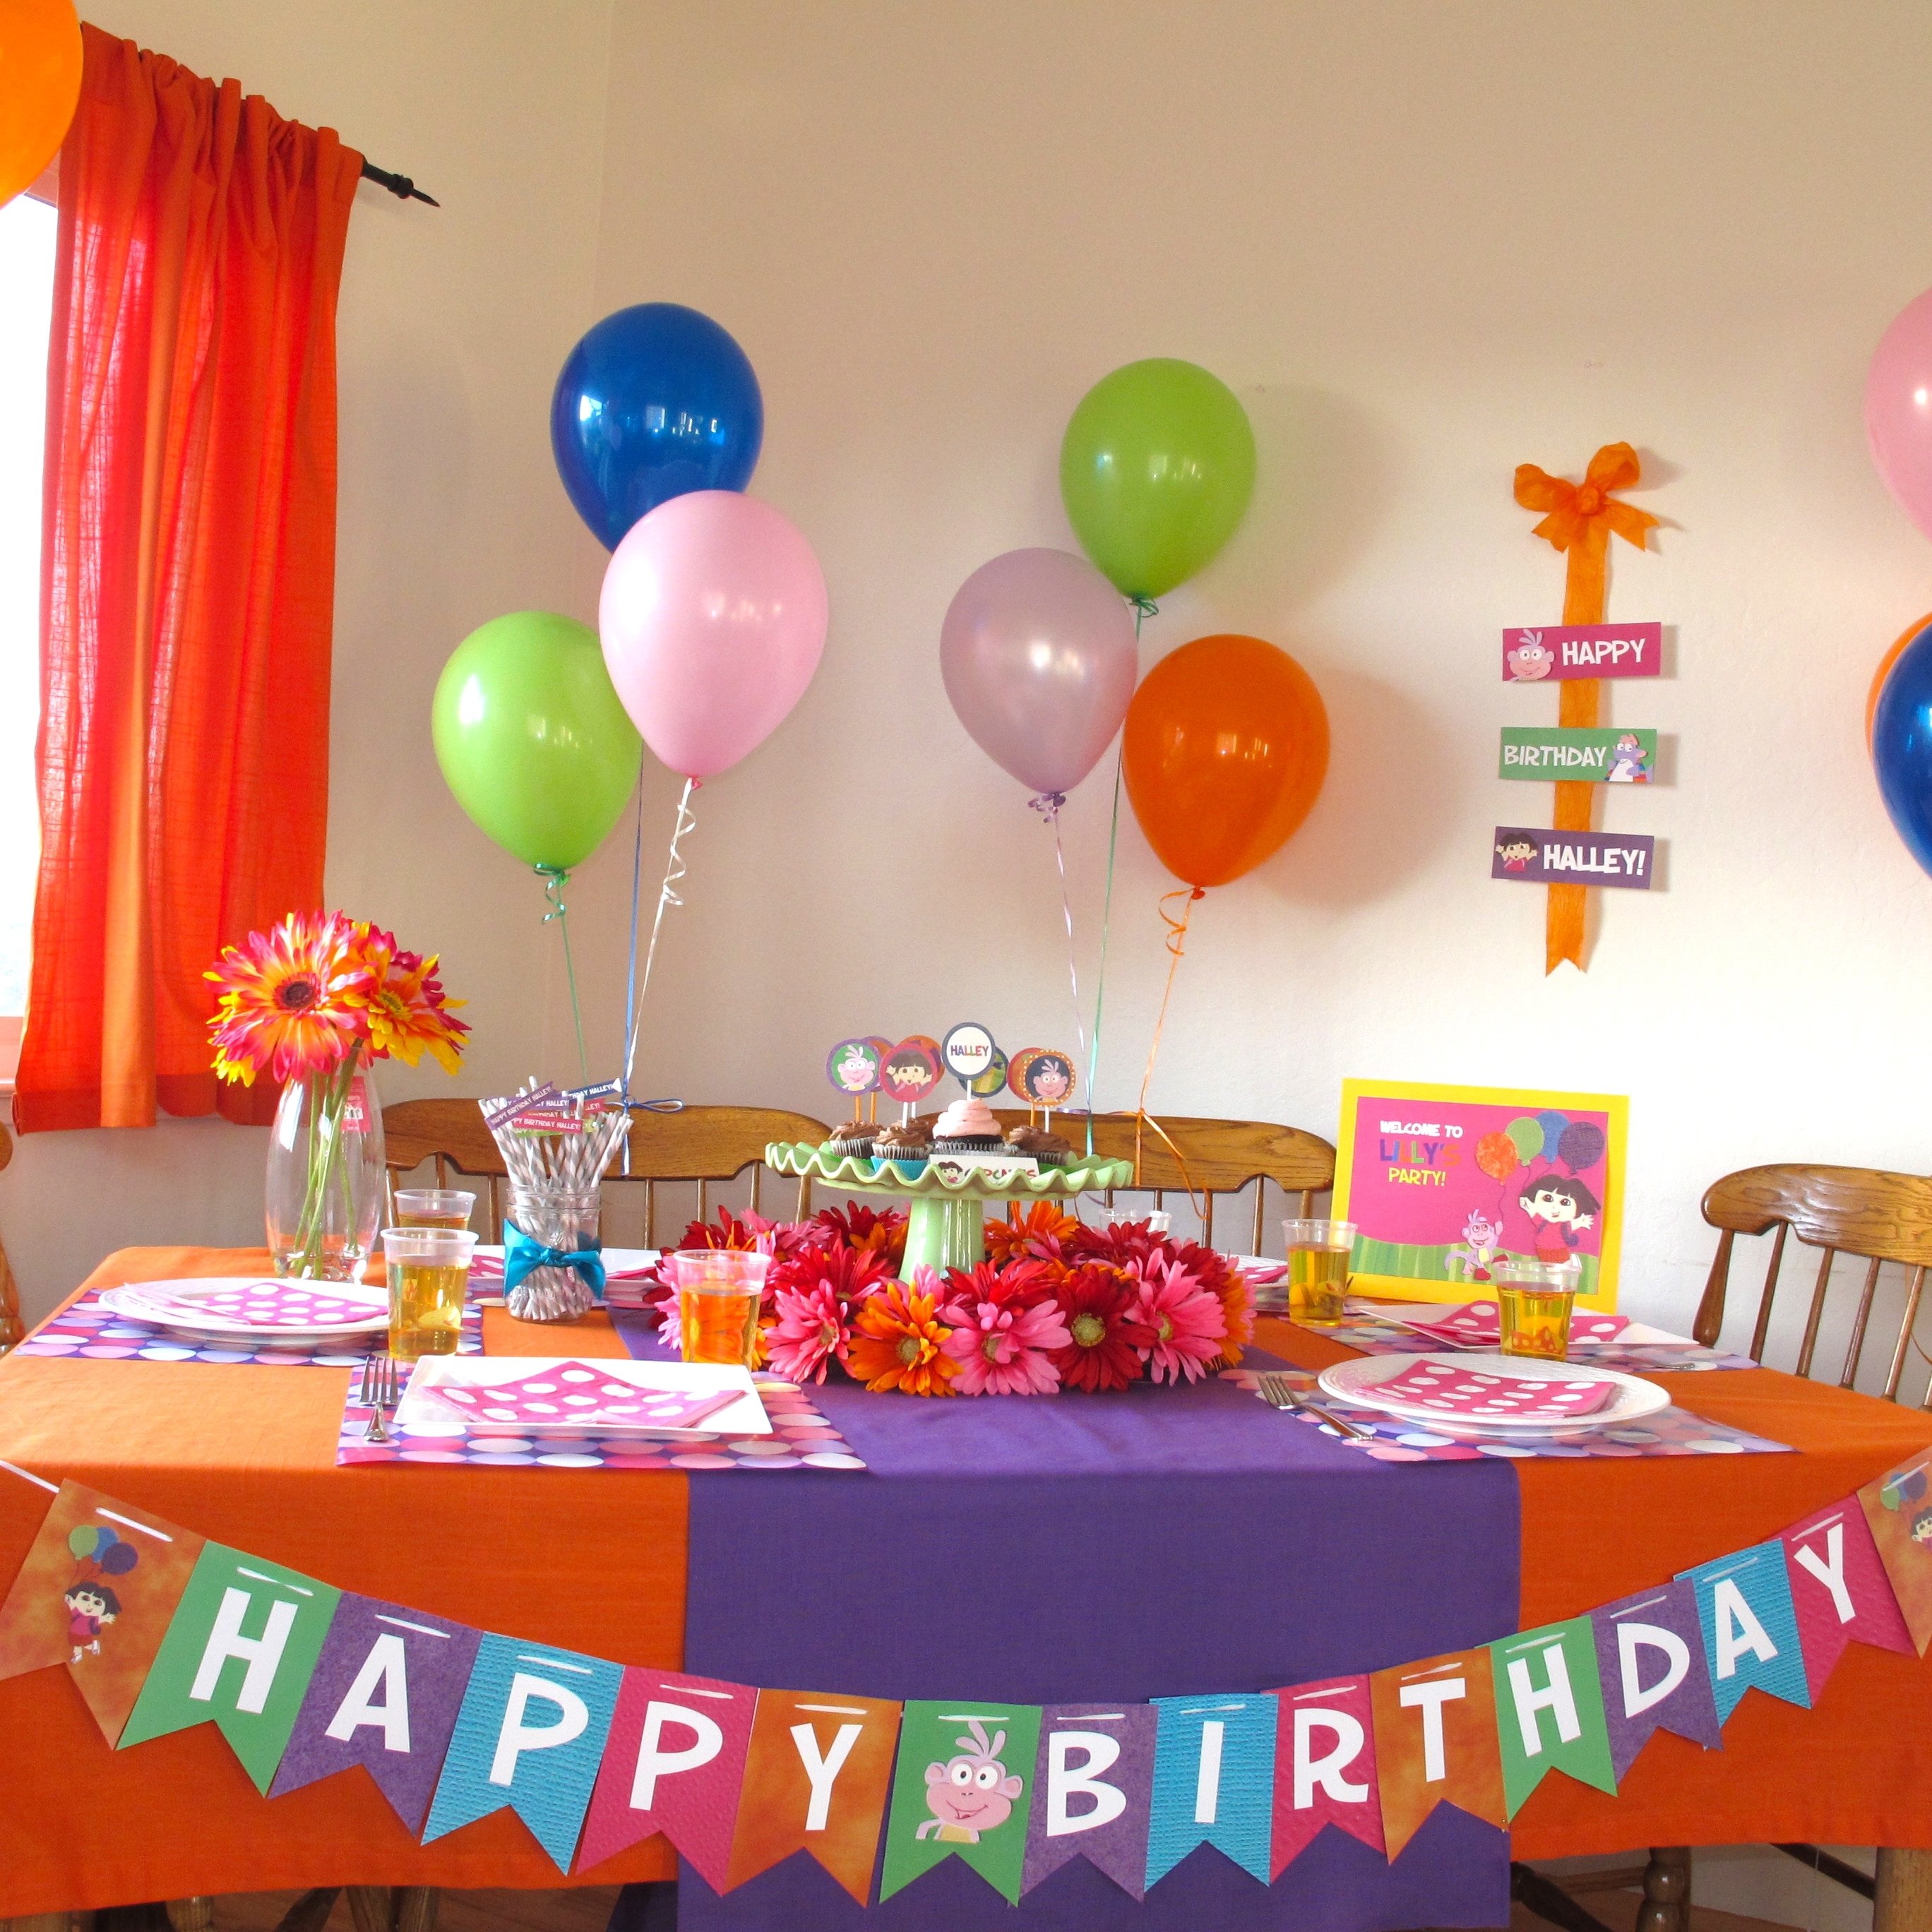 10 Perfect Dora The Explorer Birthday Party Ideas dora the explorer party pics banners birthdays and birthday party 2022